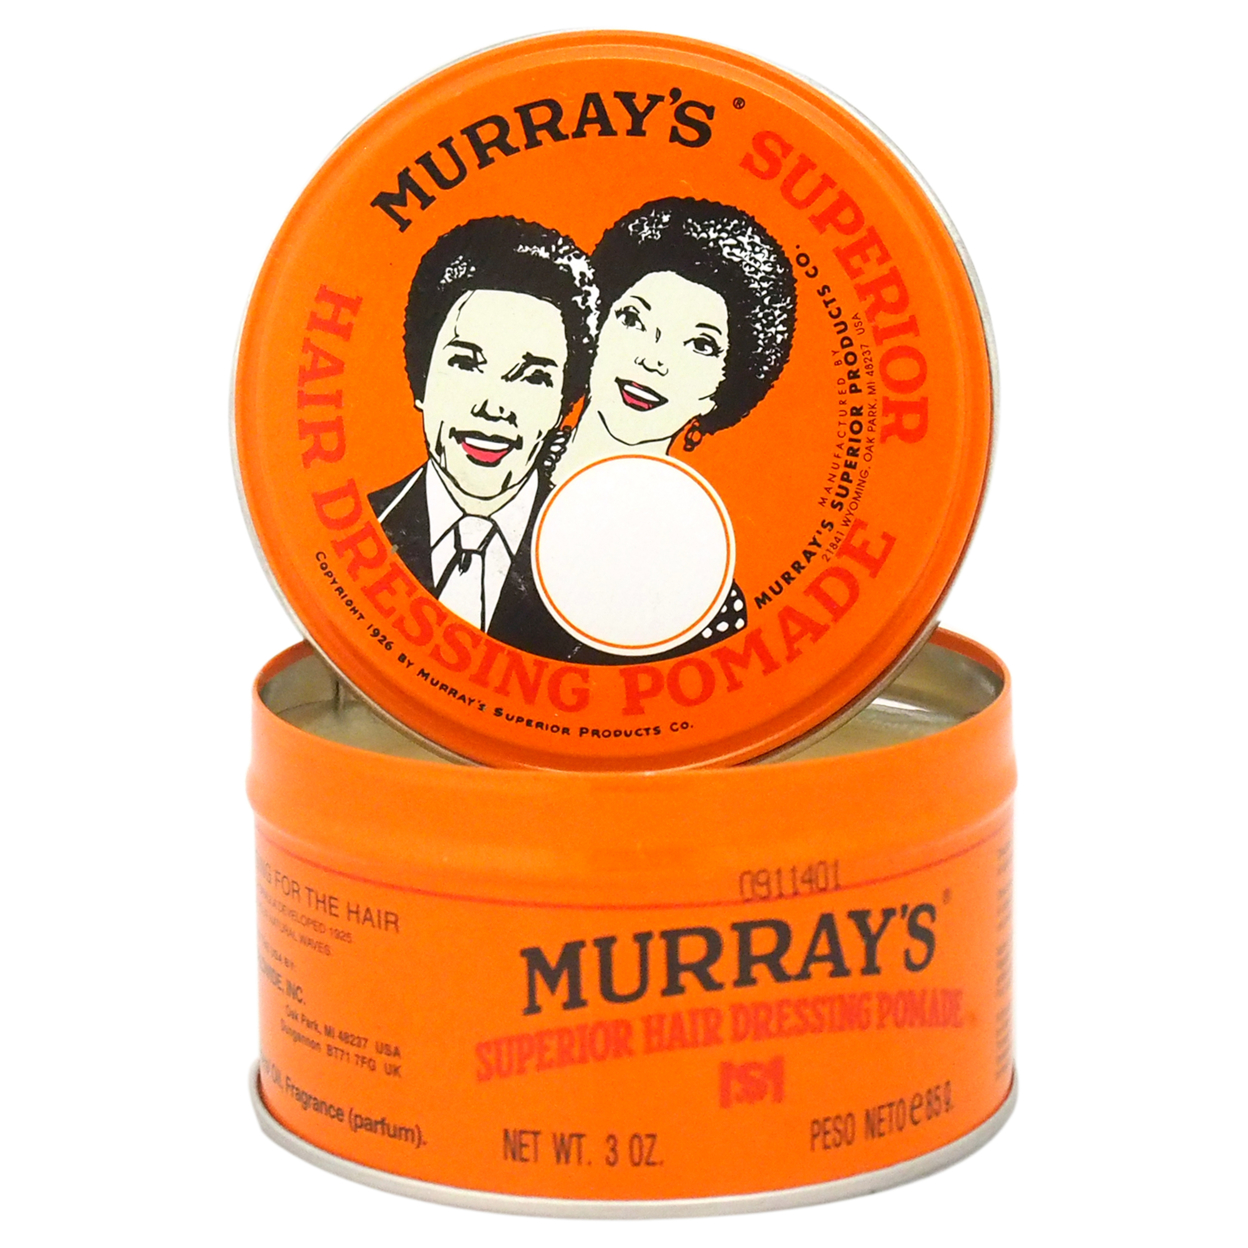 Murray's Superior Shine Enhancing Texturizing Hair Dressing Pomade, 3 oz - image 1 of 6